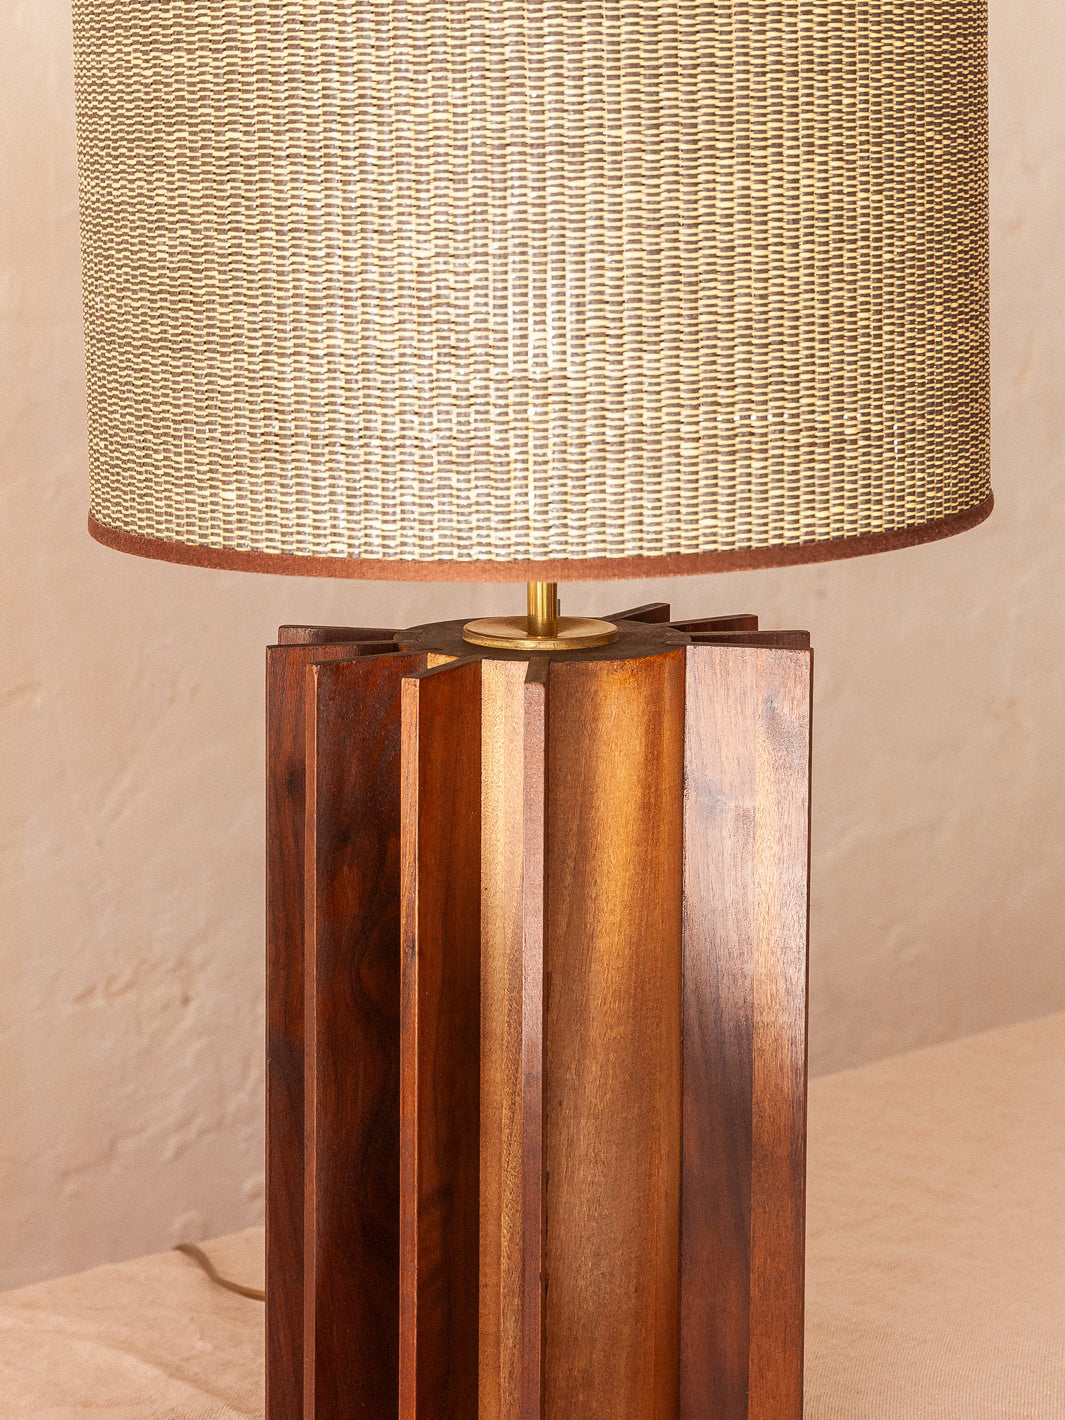 Walnut table lamp and raffia lampshade